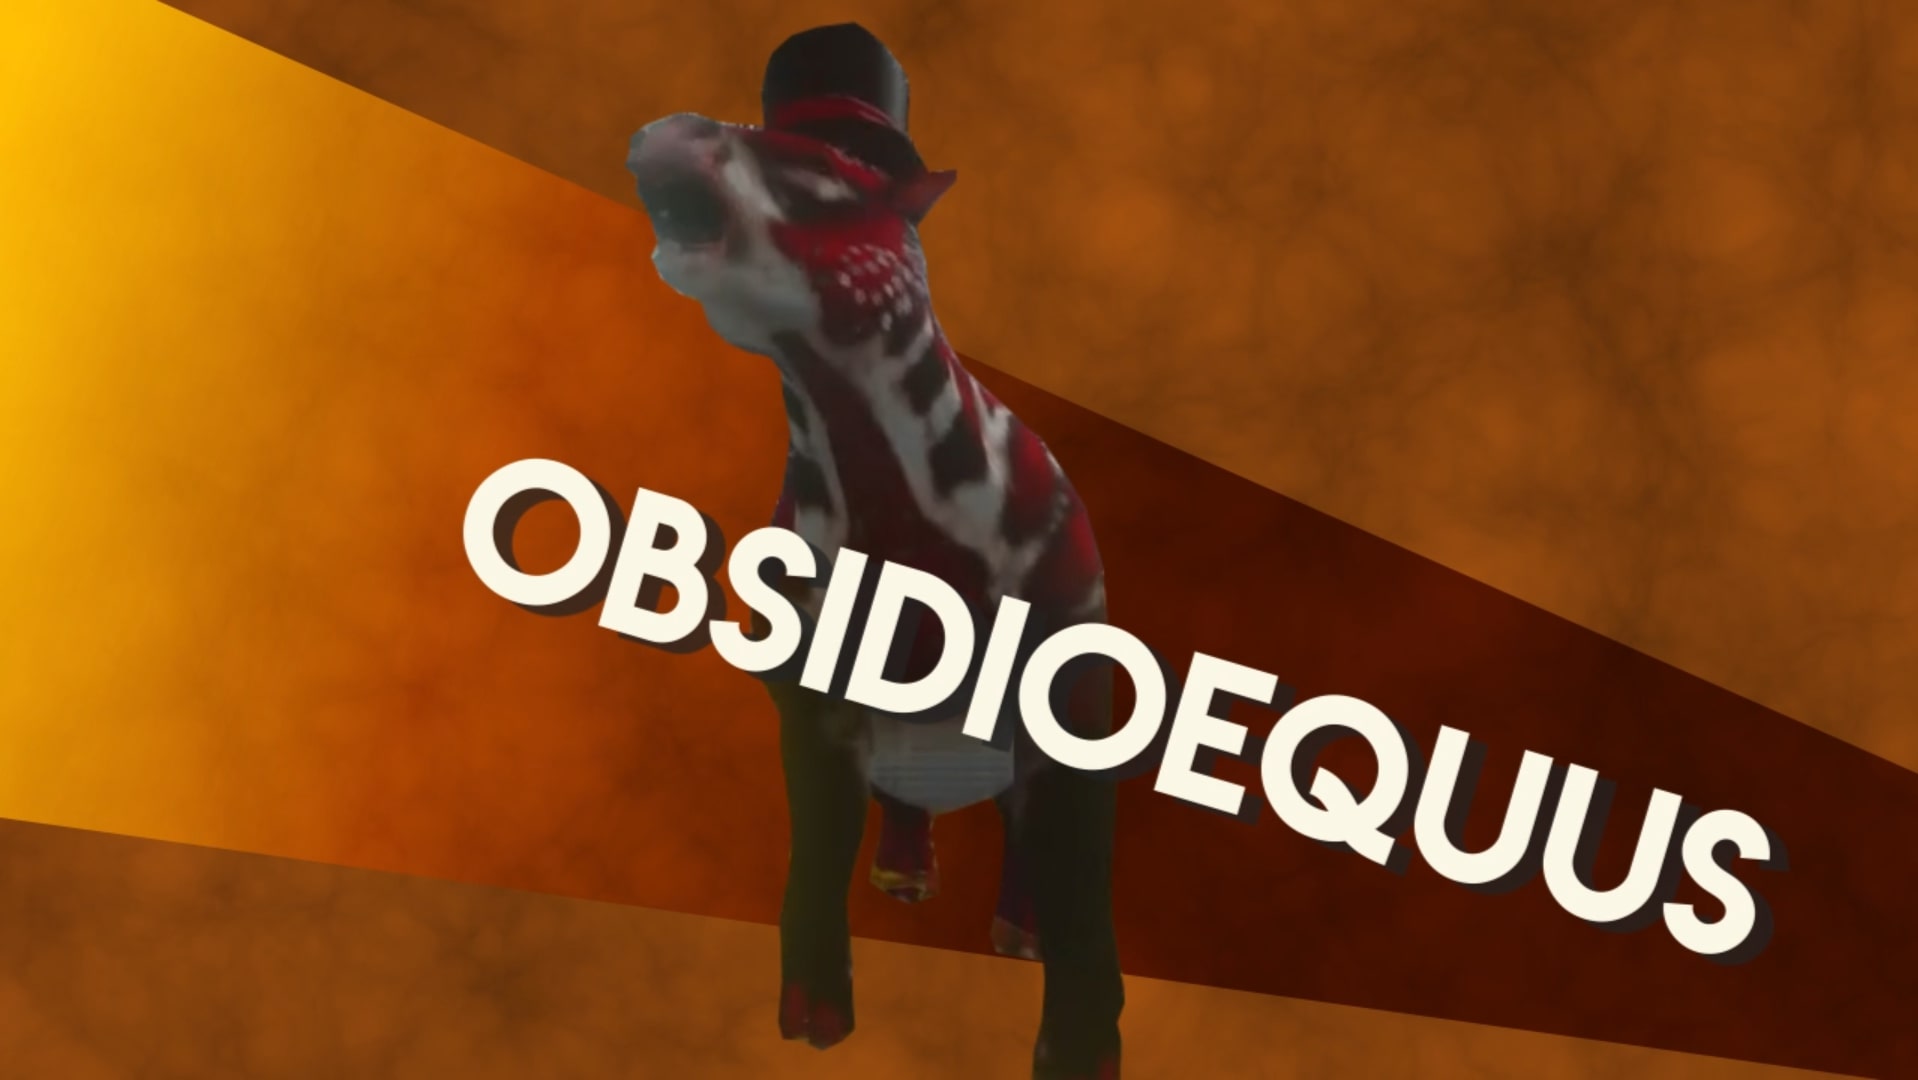 Obsidioequus Official Ark Survival Evolved Wiki